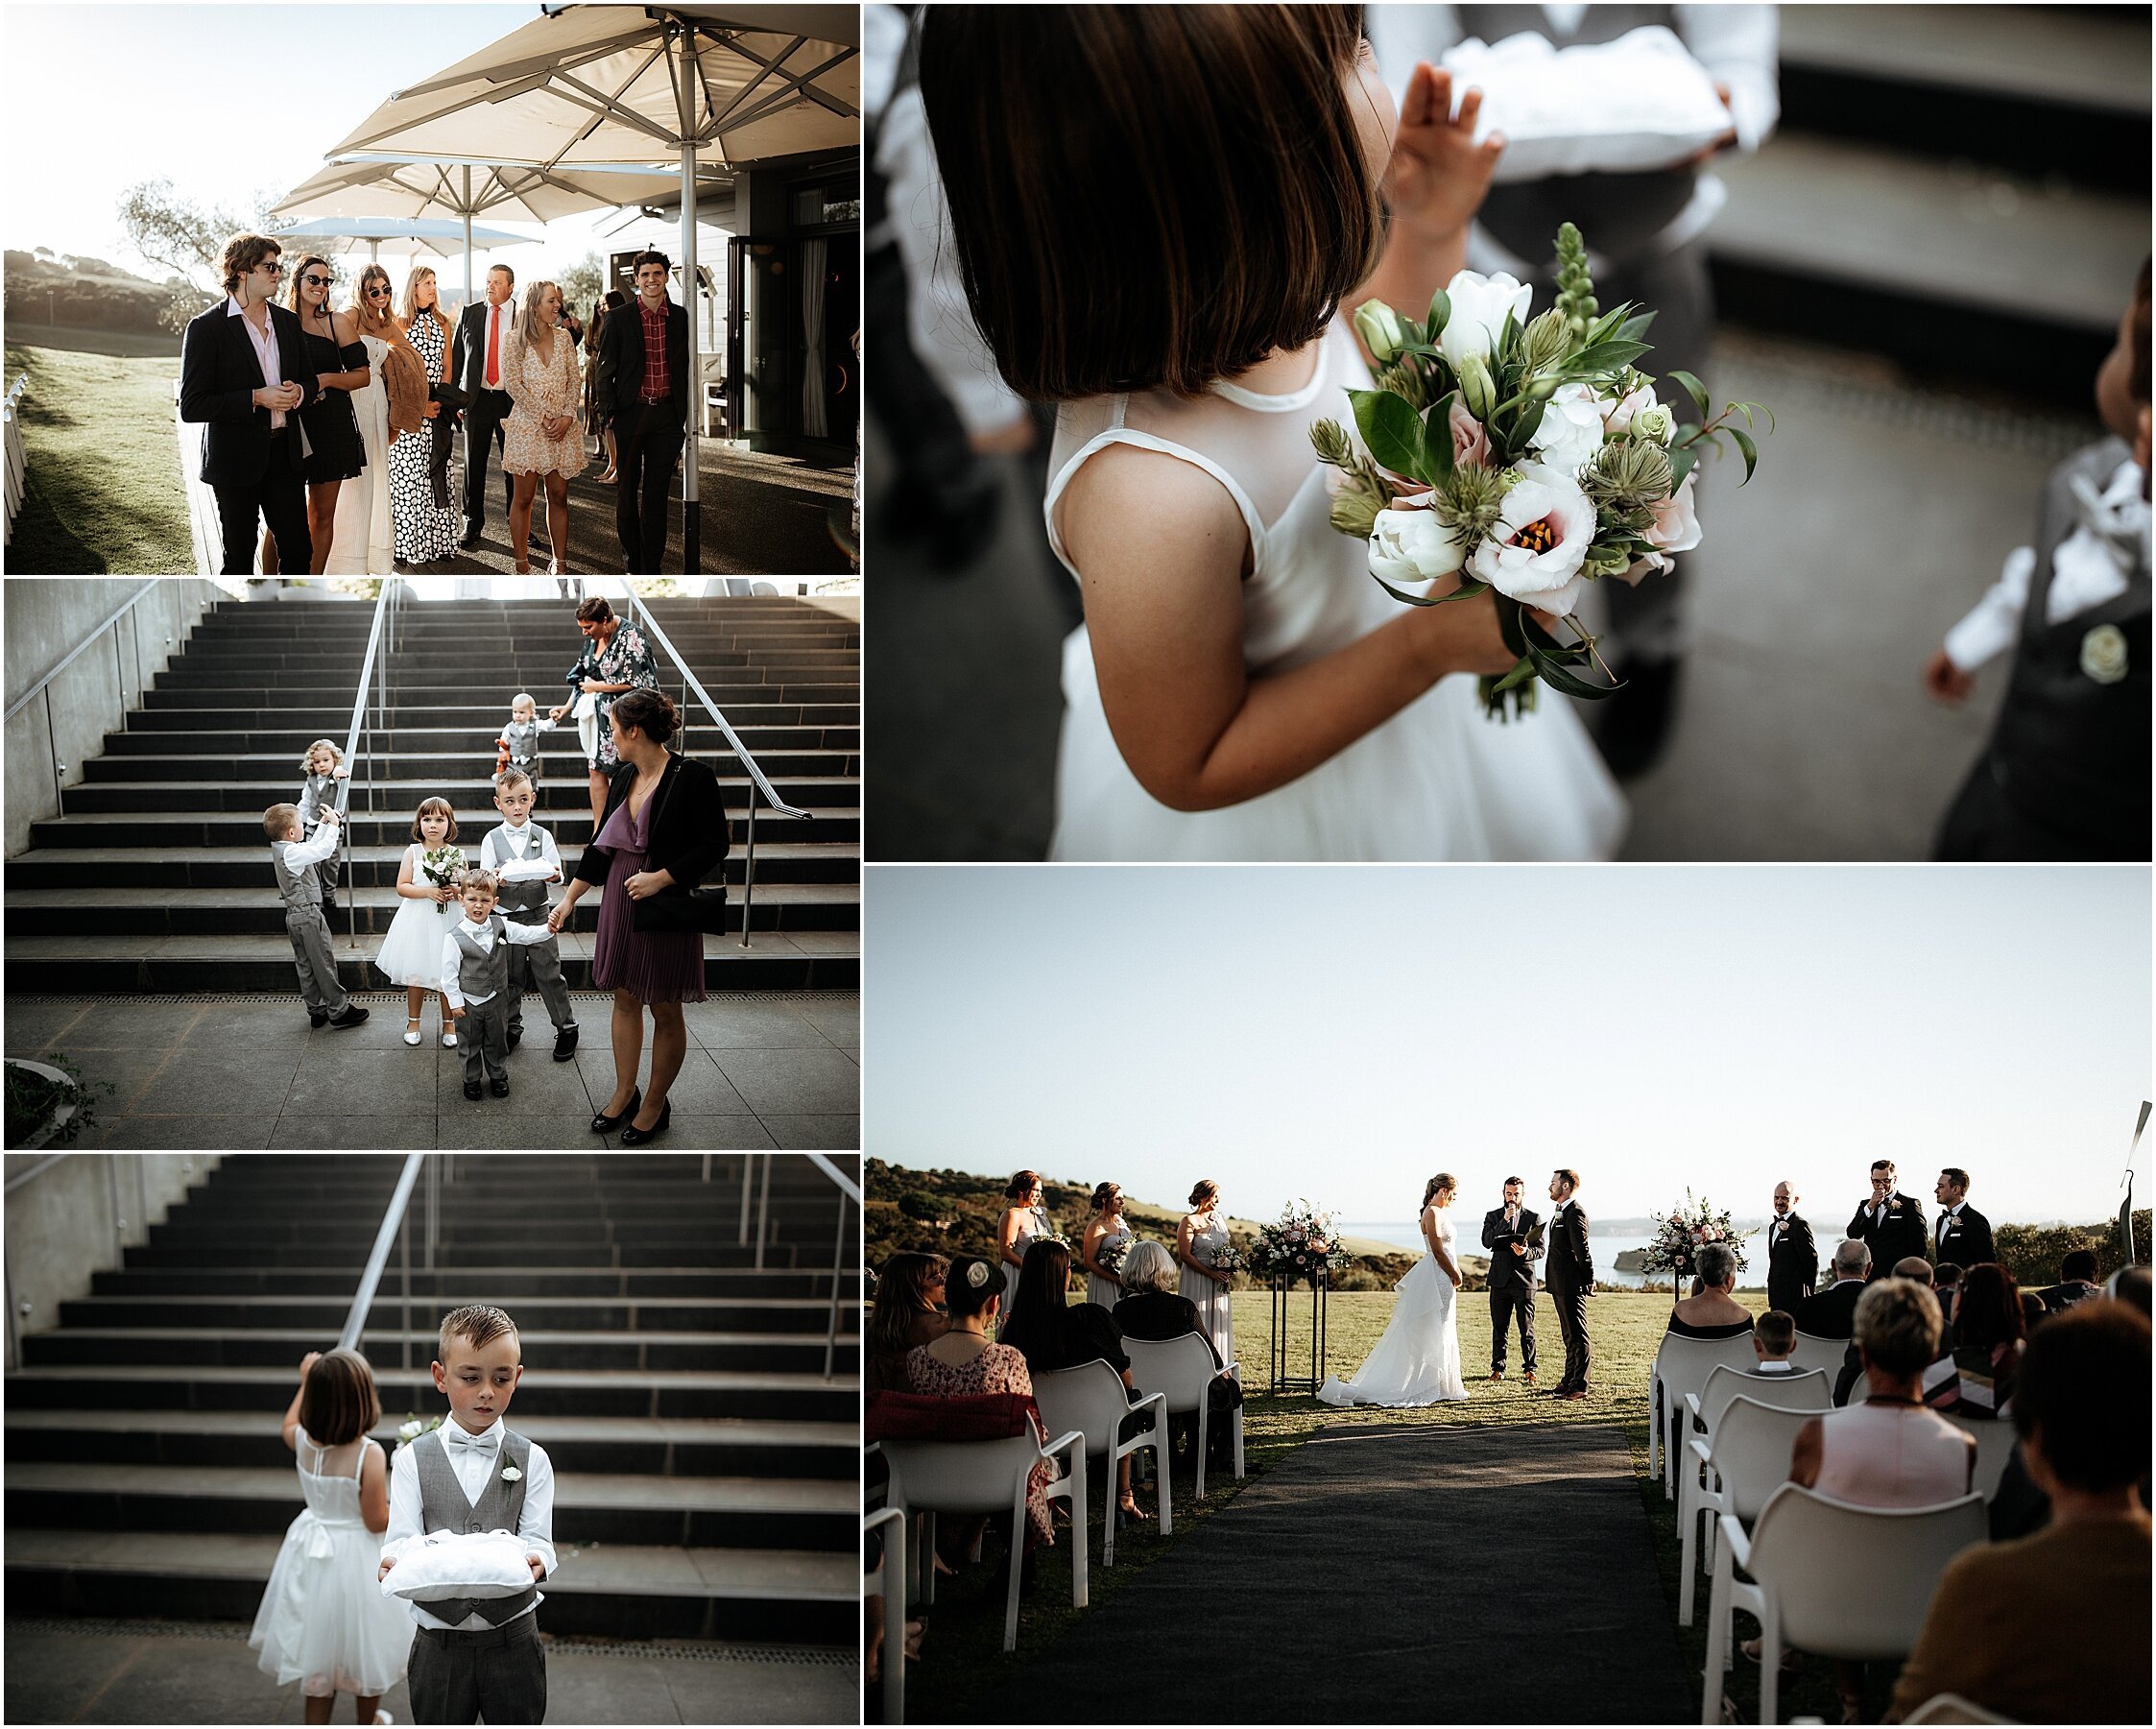 Zanda+Auckland+wedding+photographer+chic+vibrant+Cable+Bay+vineyard+venue+Waiheke+Island+New+Zealand_37.jpeg